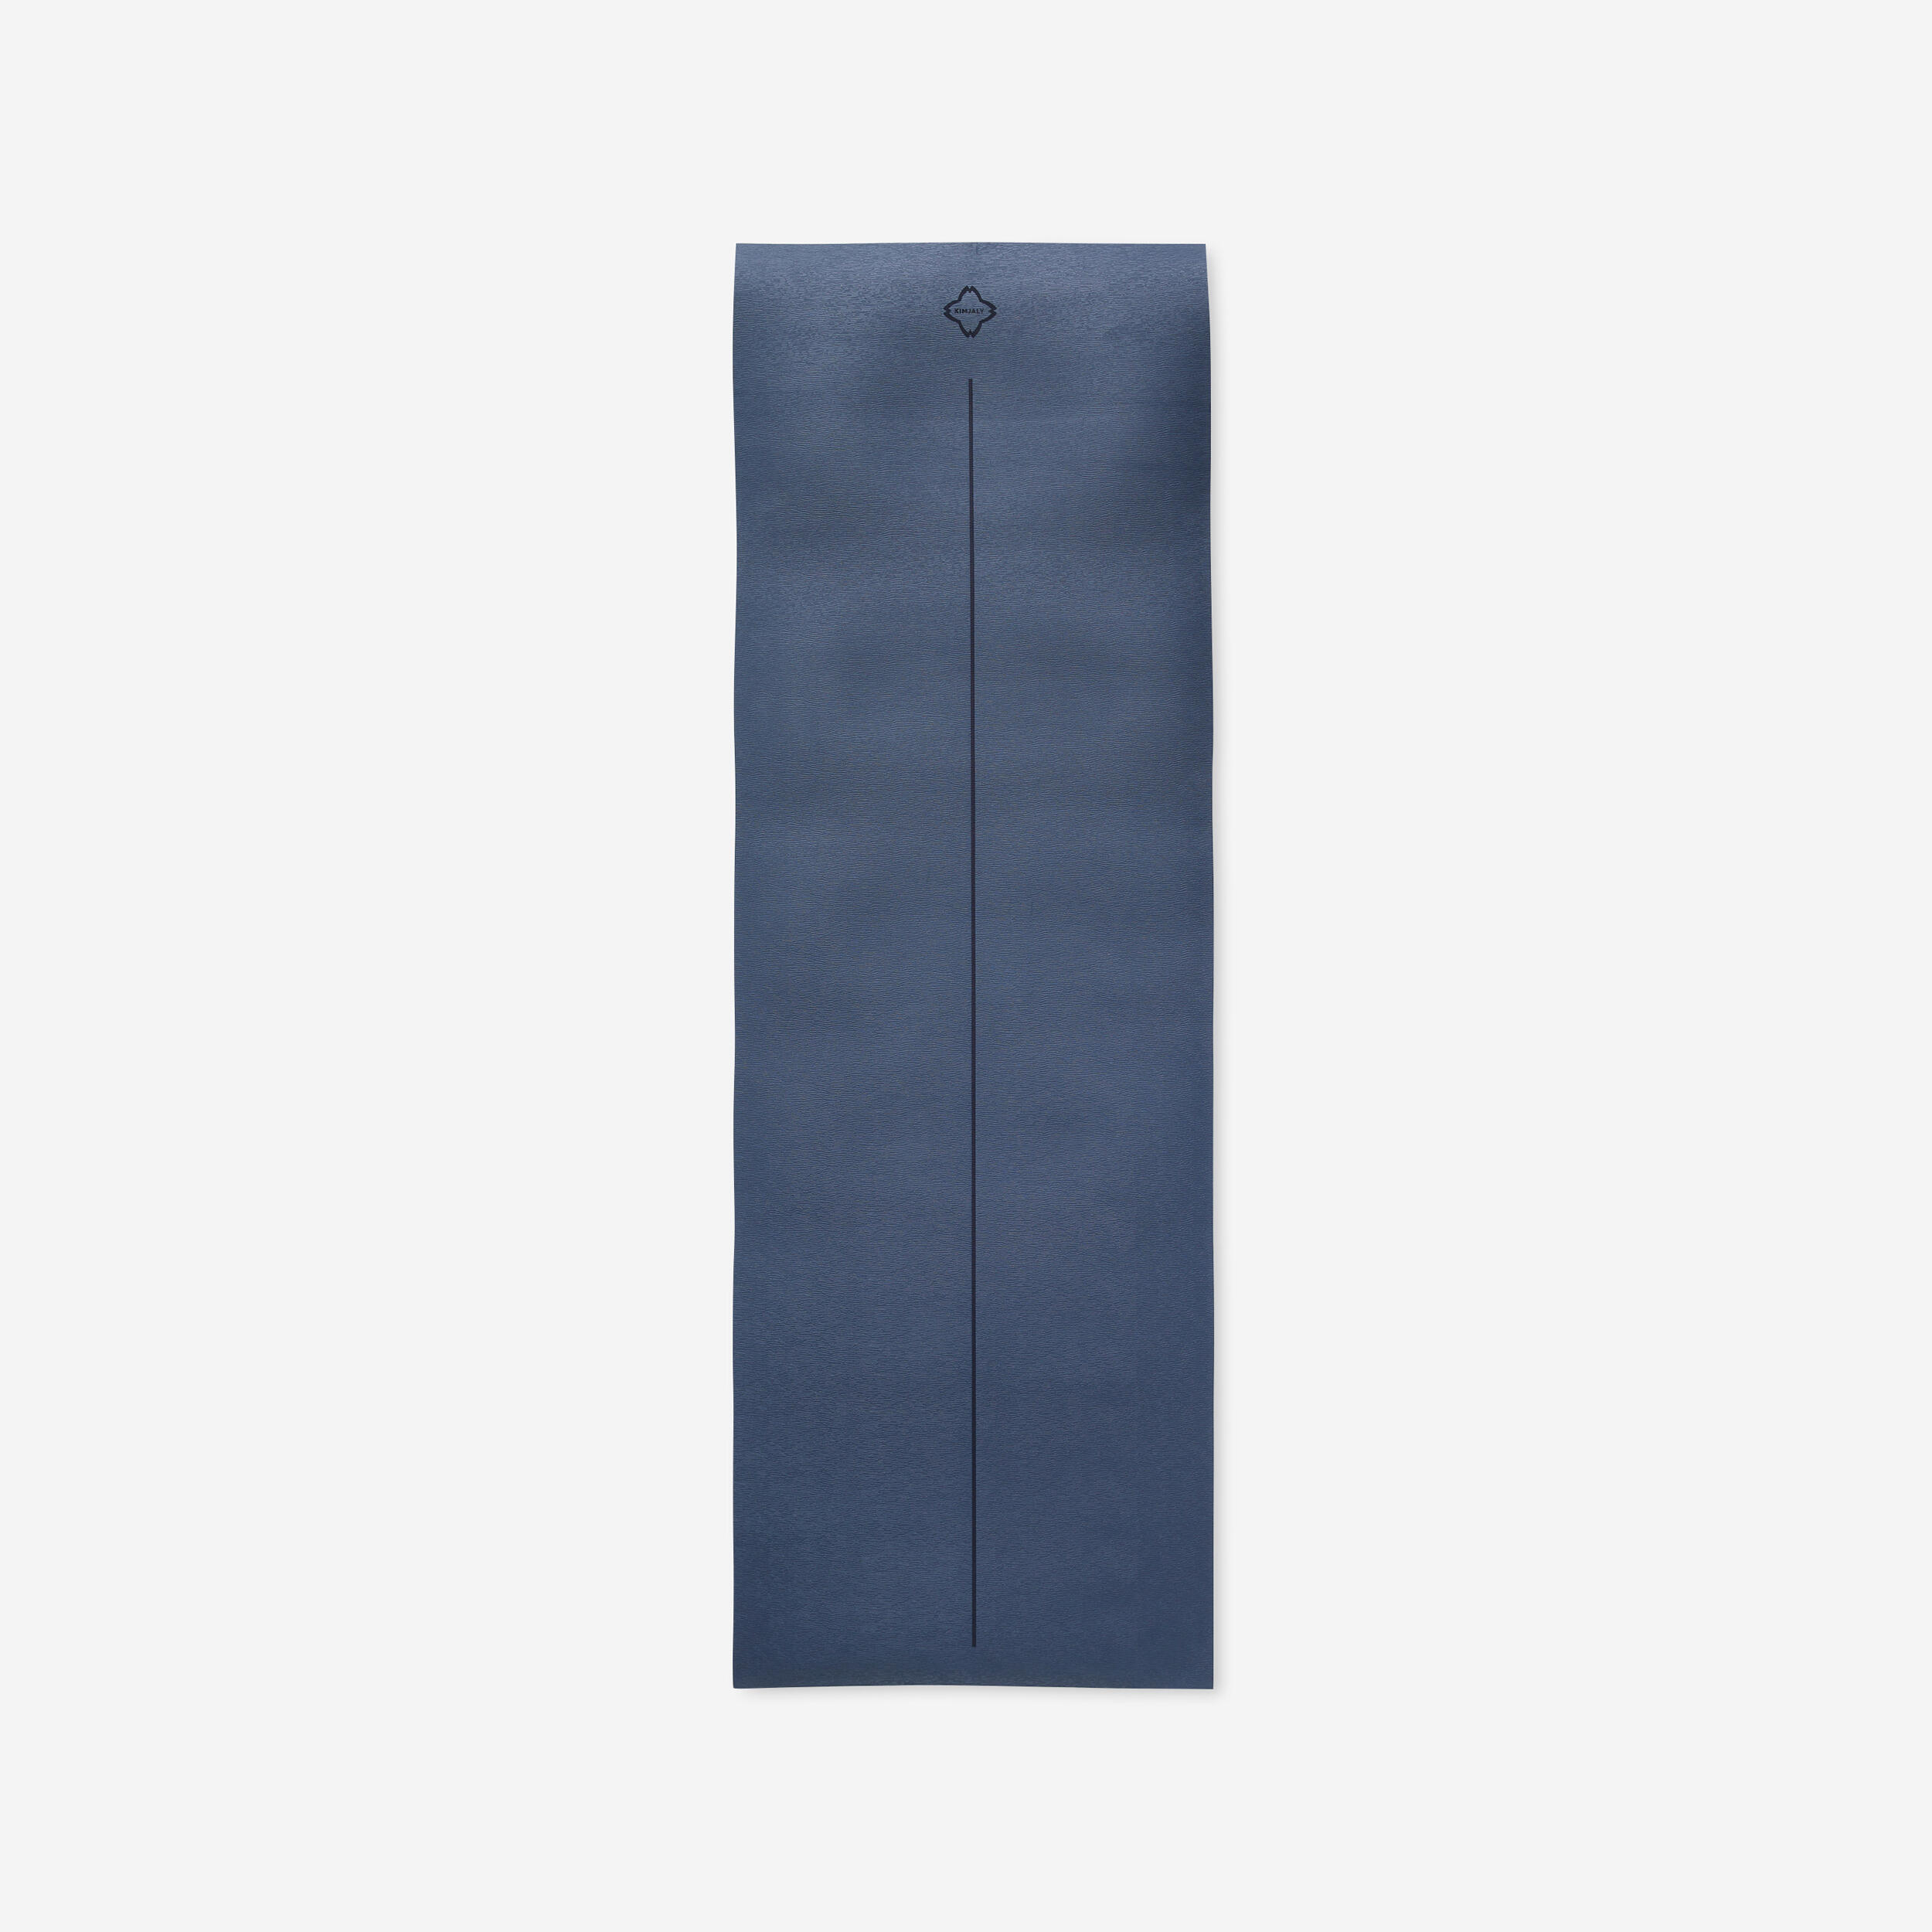 Kimjaly Yoga Towel Mat Non-Slip Machine Washable Rubber Side Grip Blue F/S